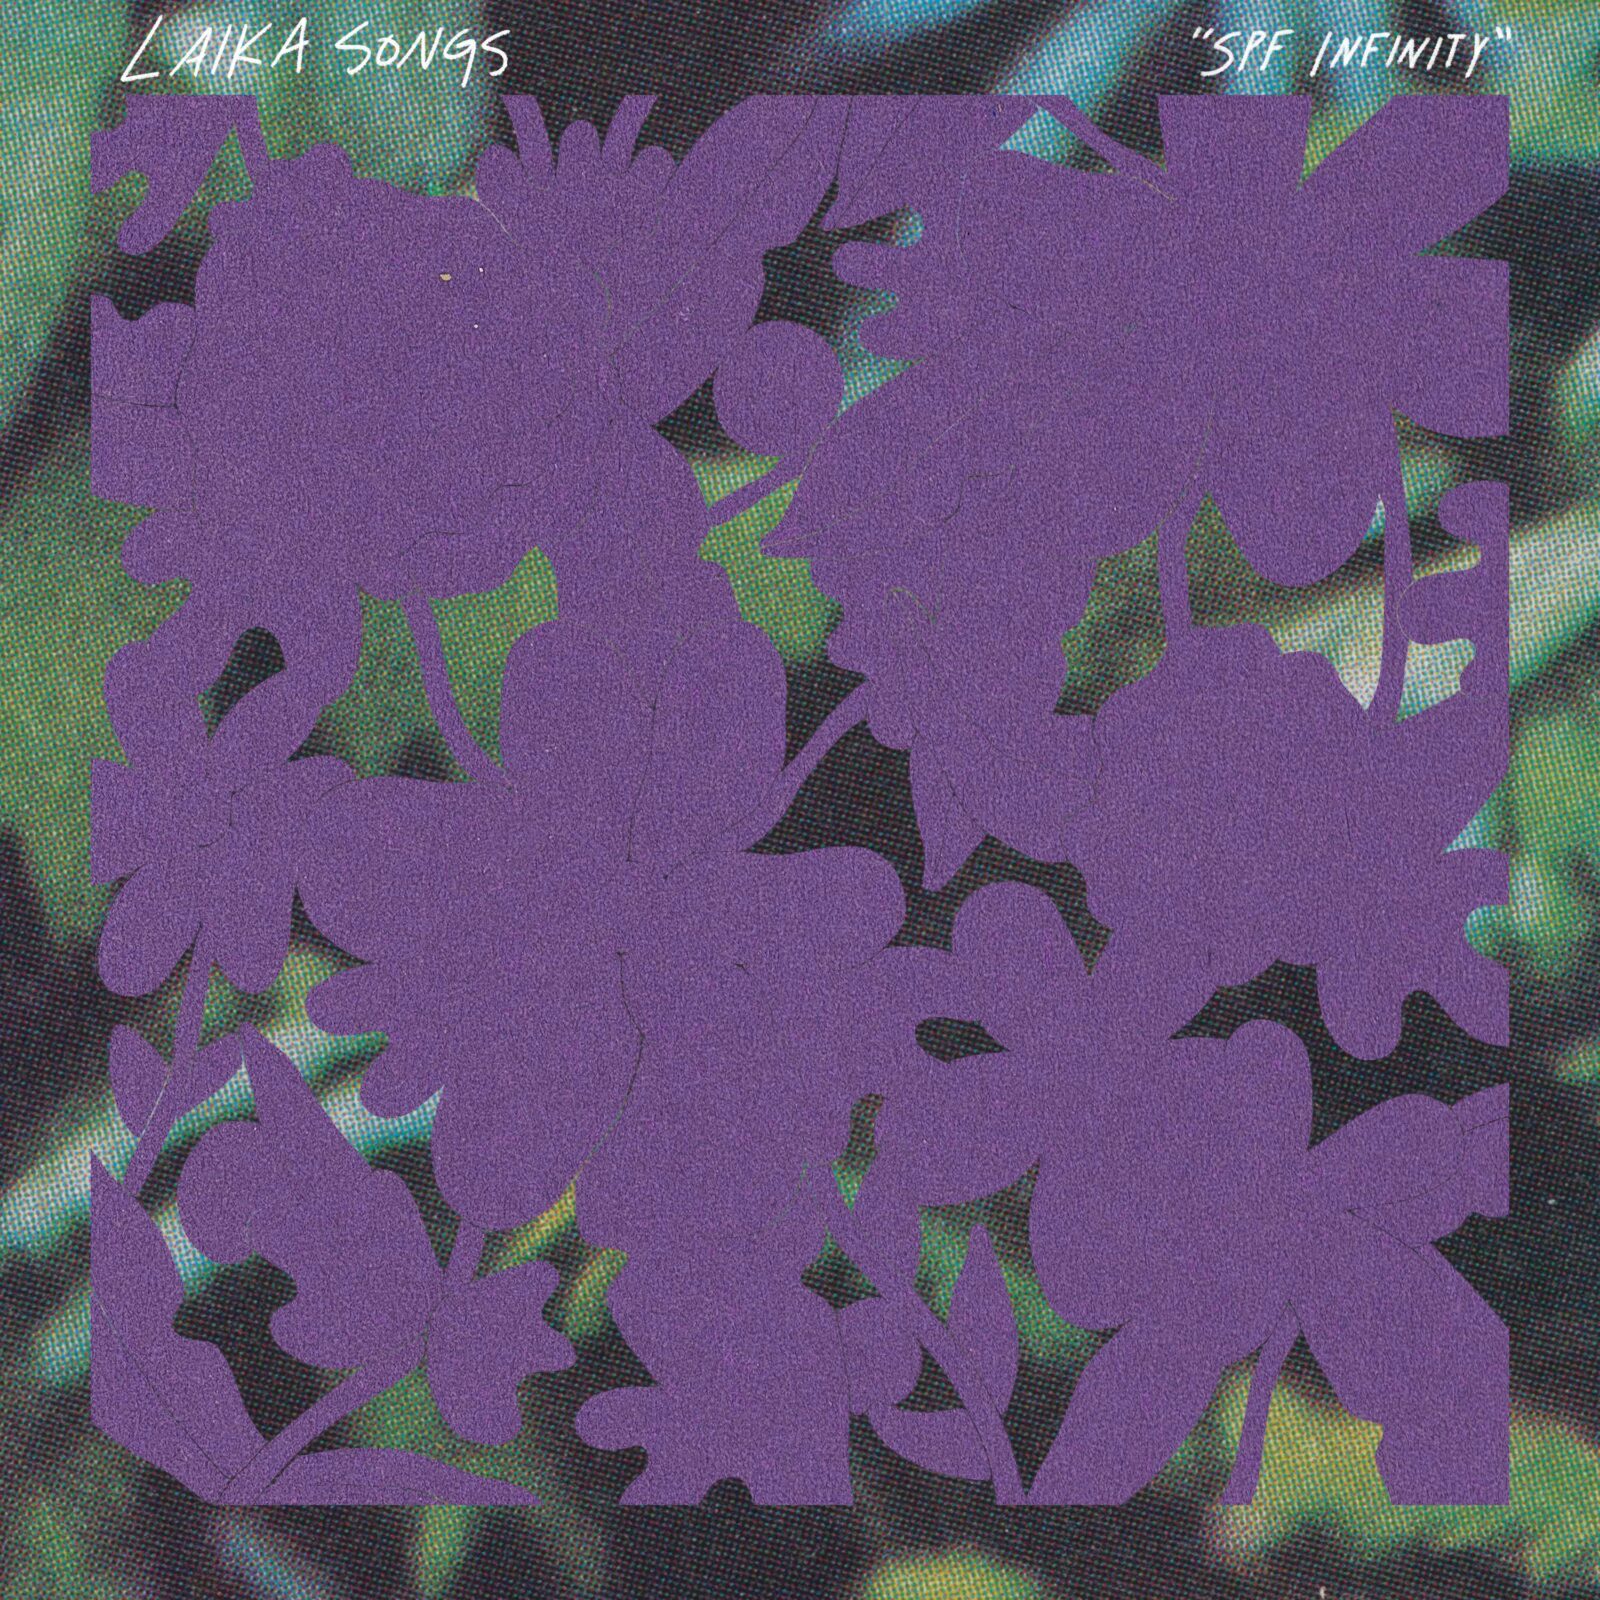 Single: Laika Songs – SPF Infinity